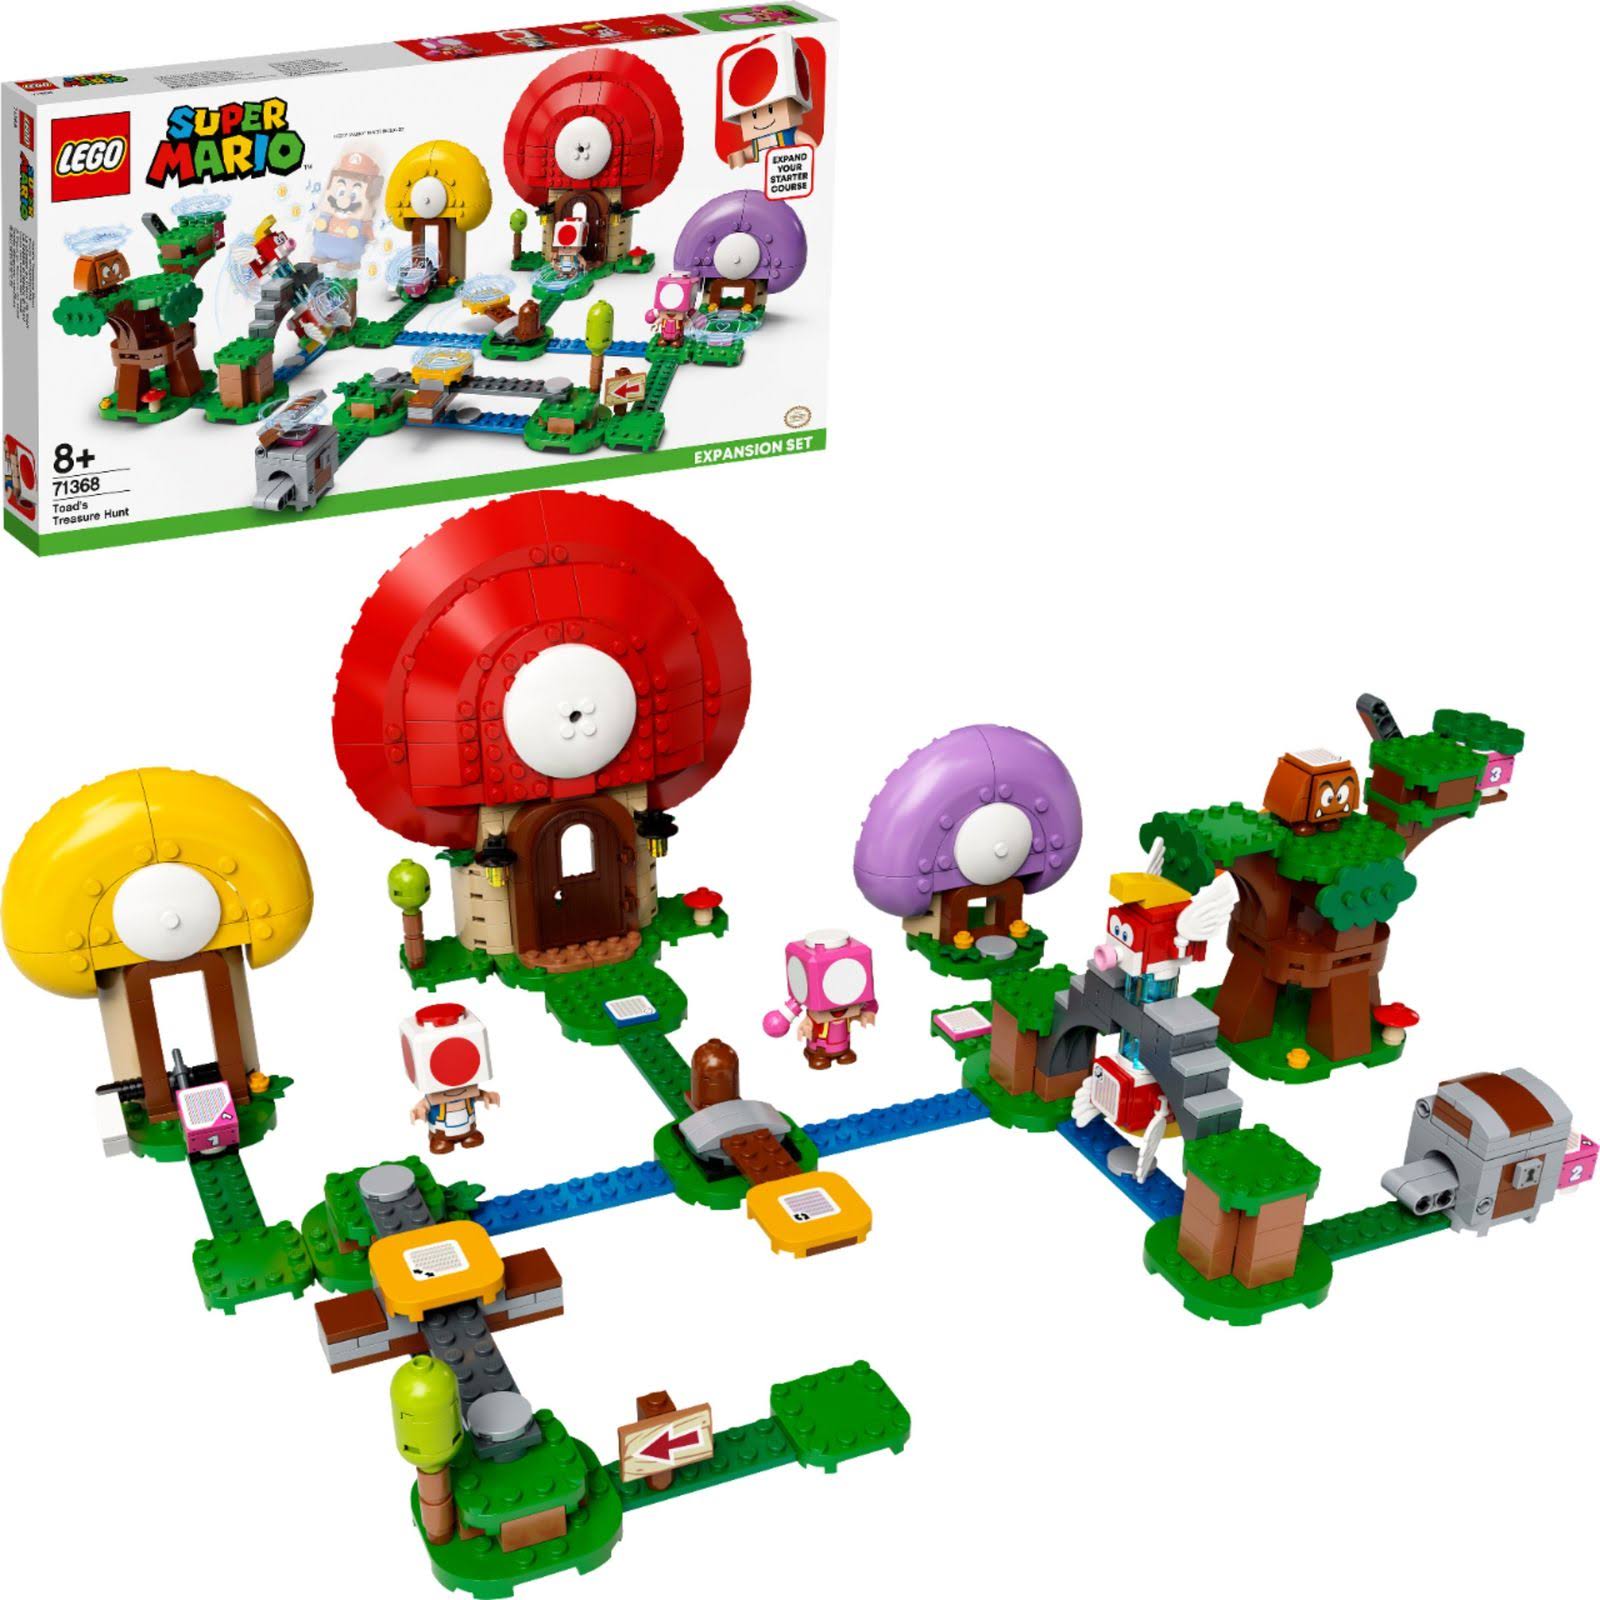 LEGO Super Mario Toads Treasure Hunt 71368 464 Piece Expansion Set